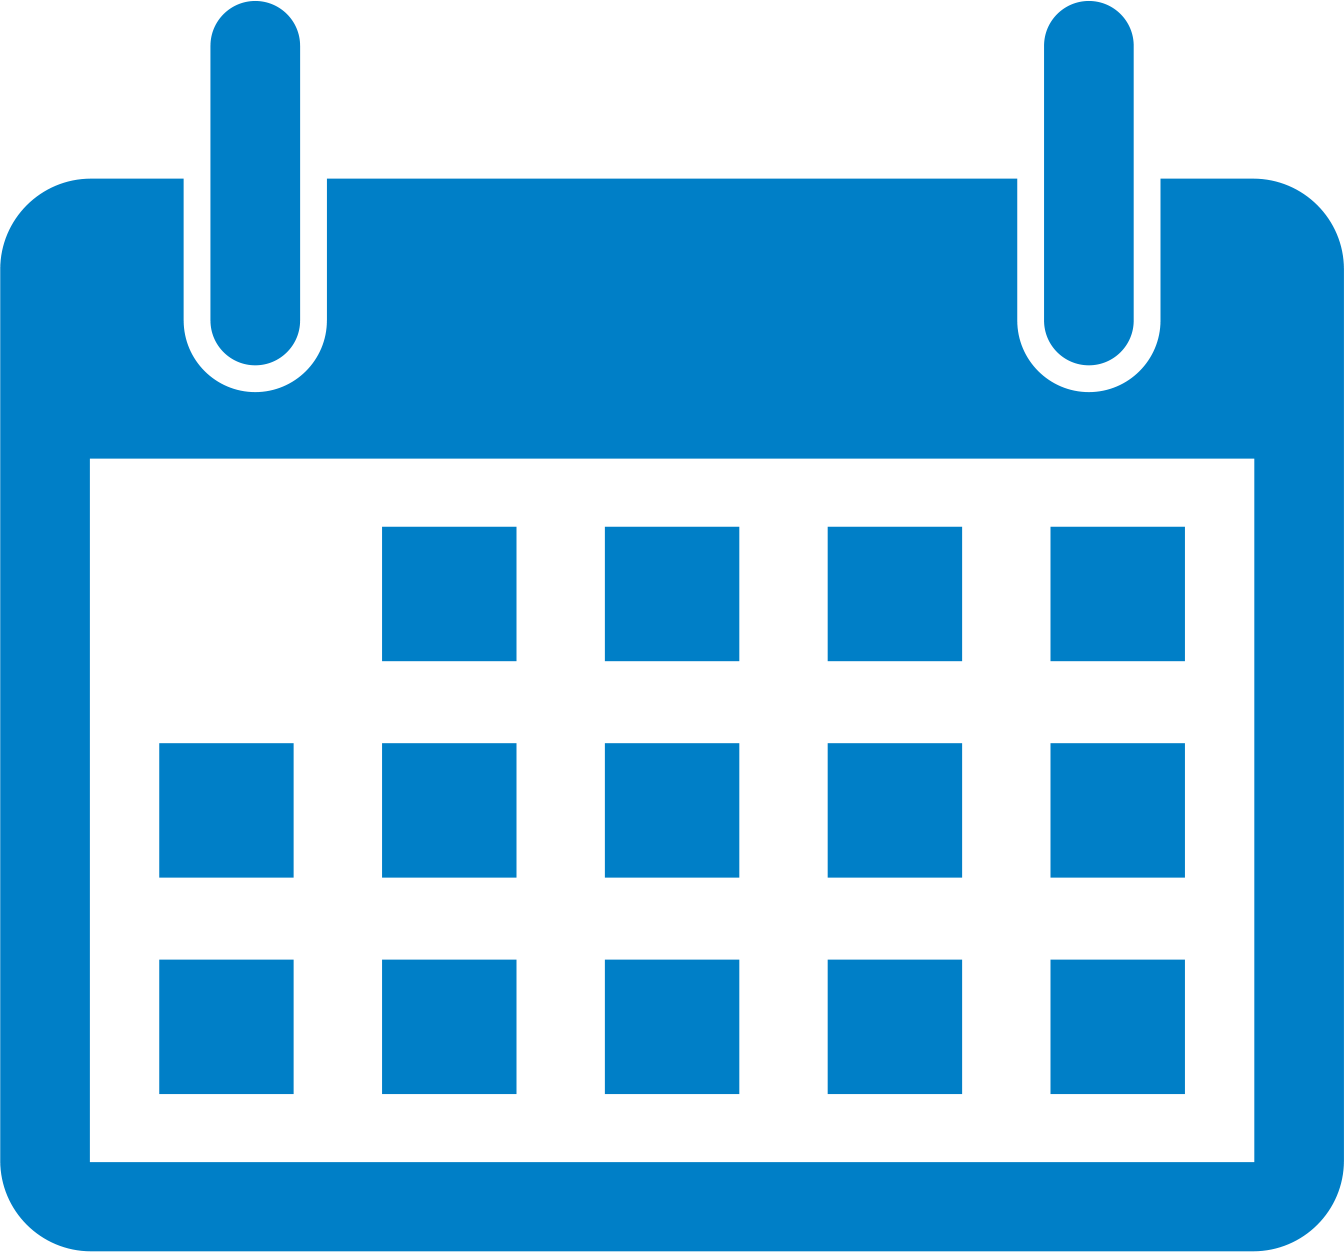 Blue line art illustration of a calendar